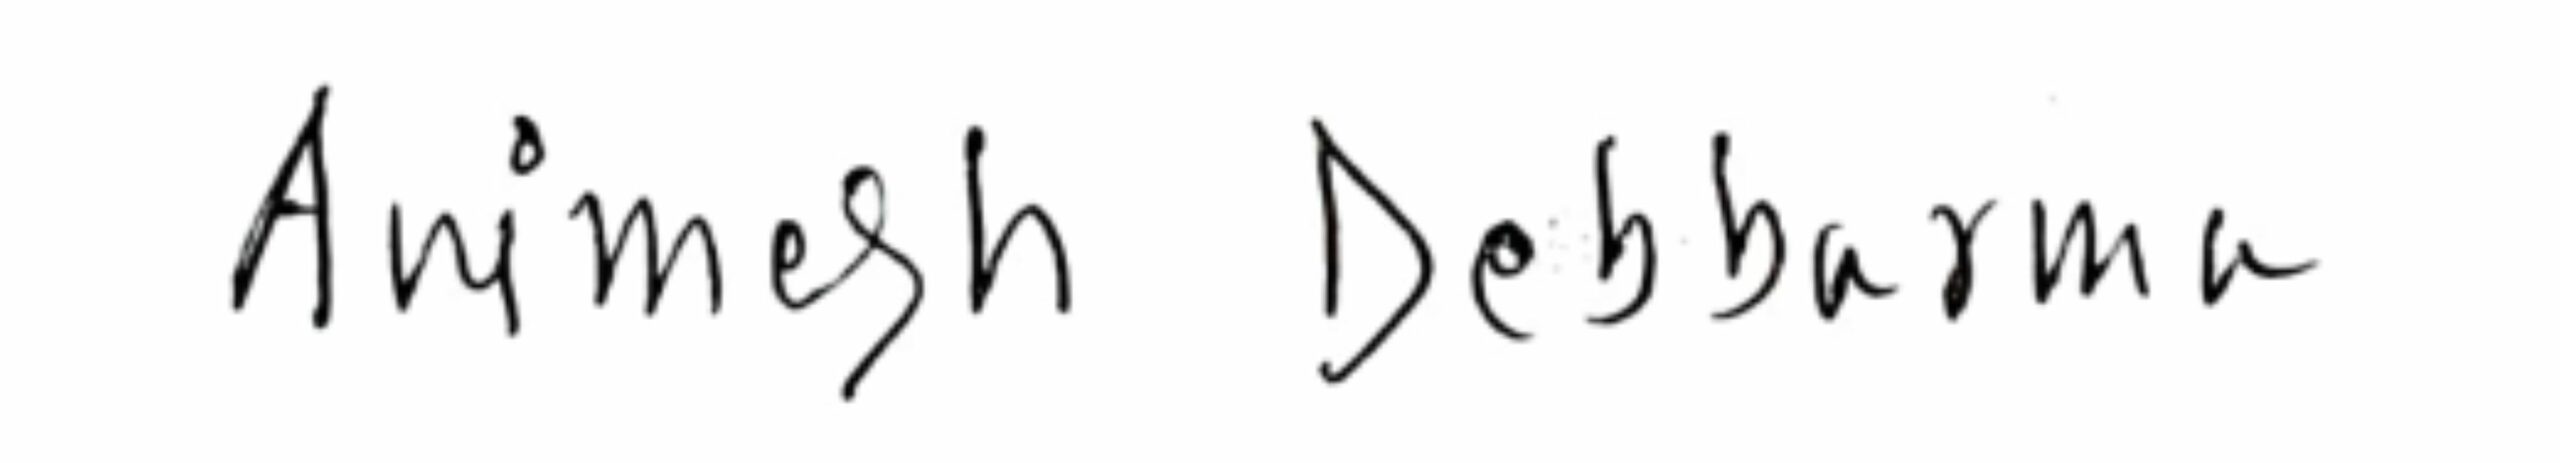 Animesh Debbarma's signature